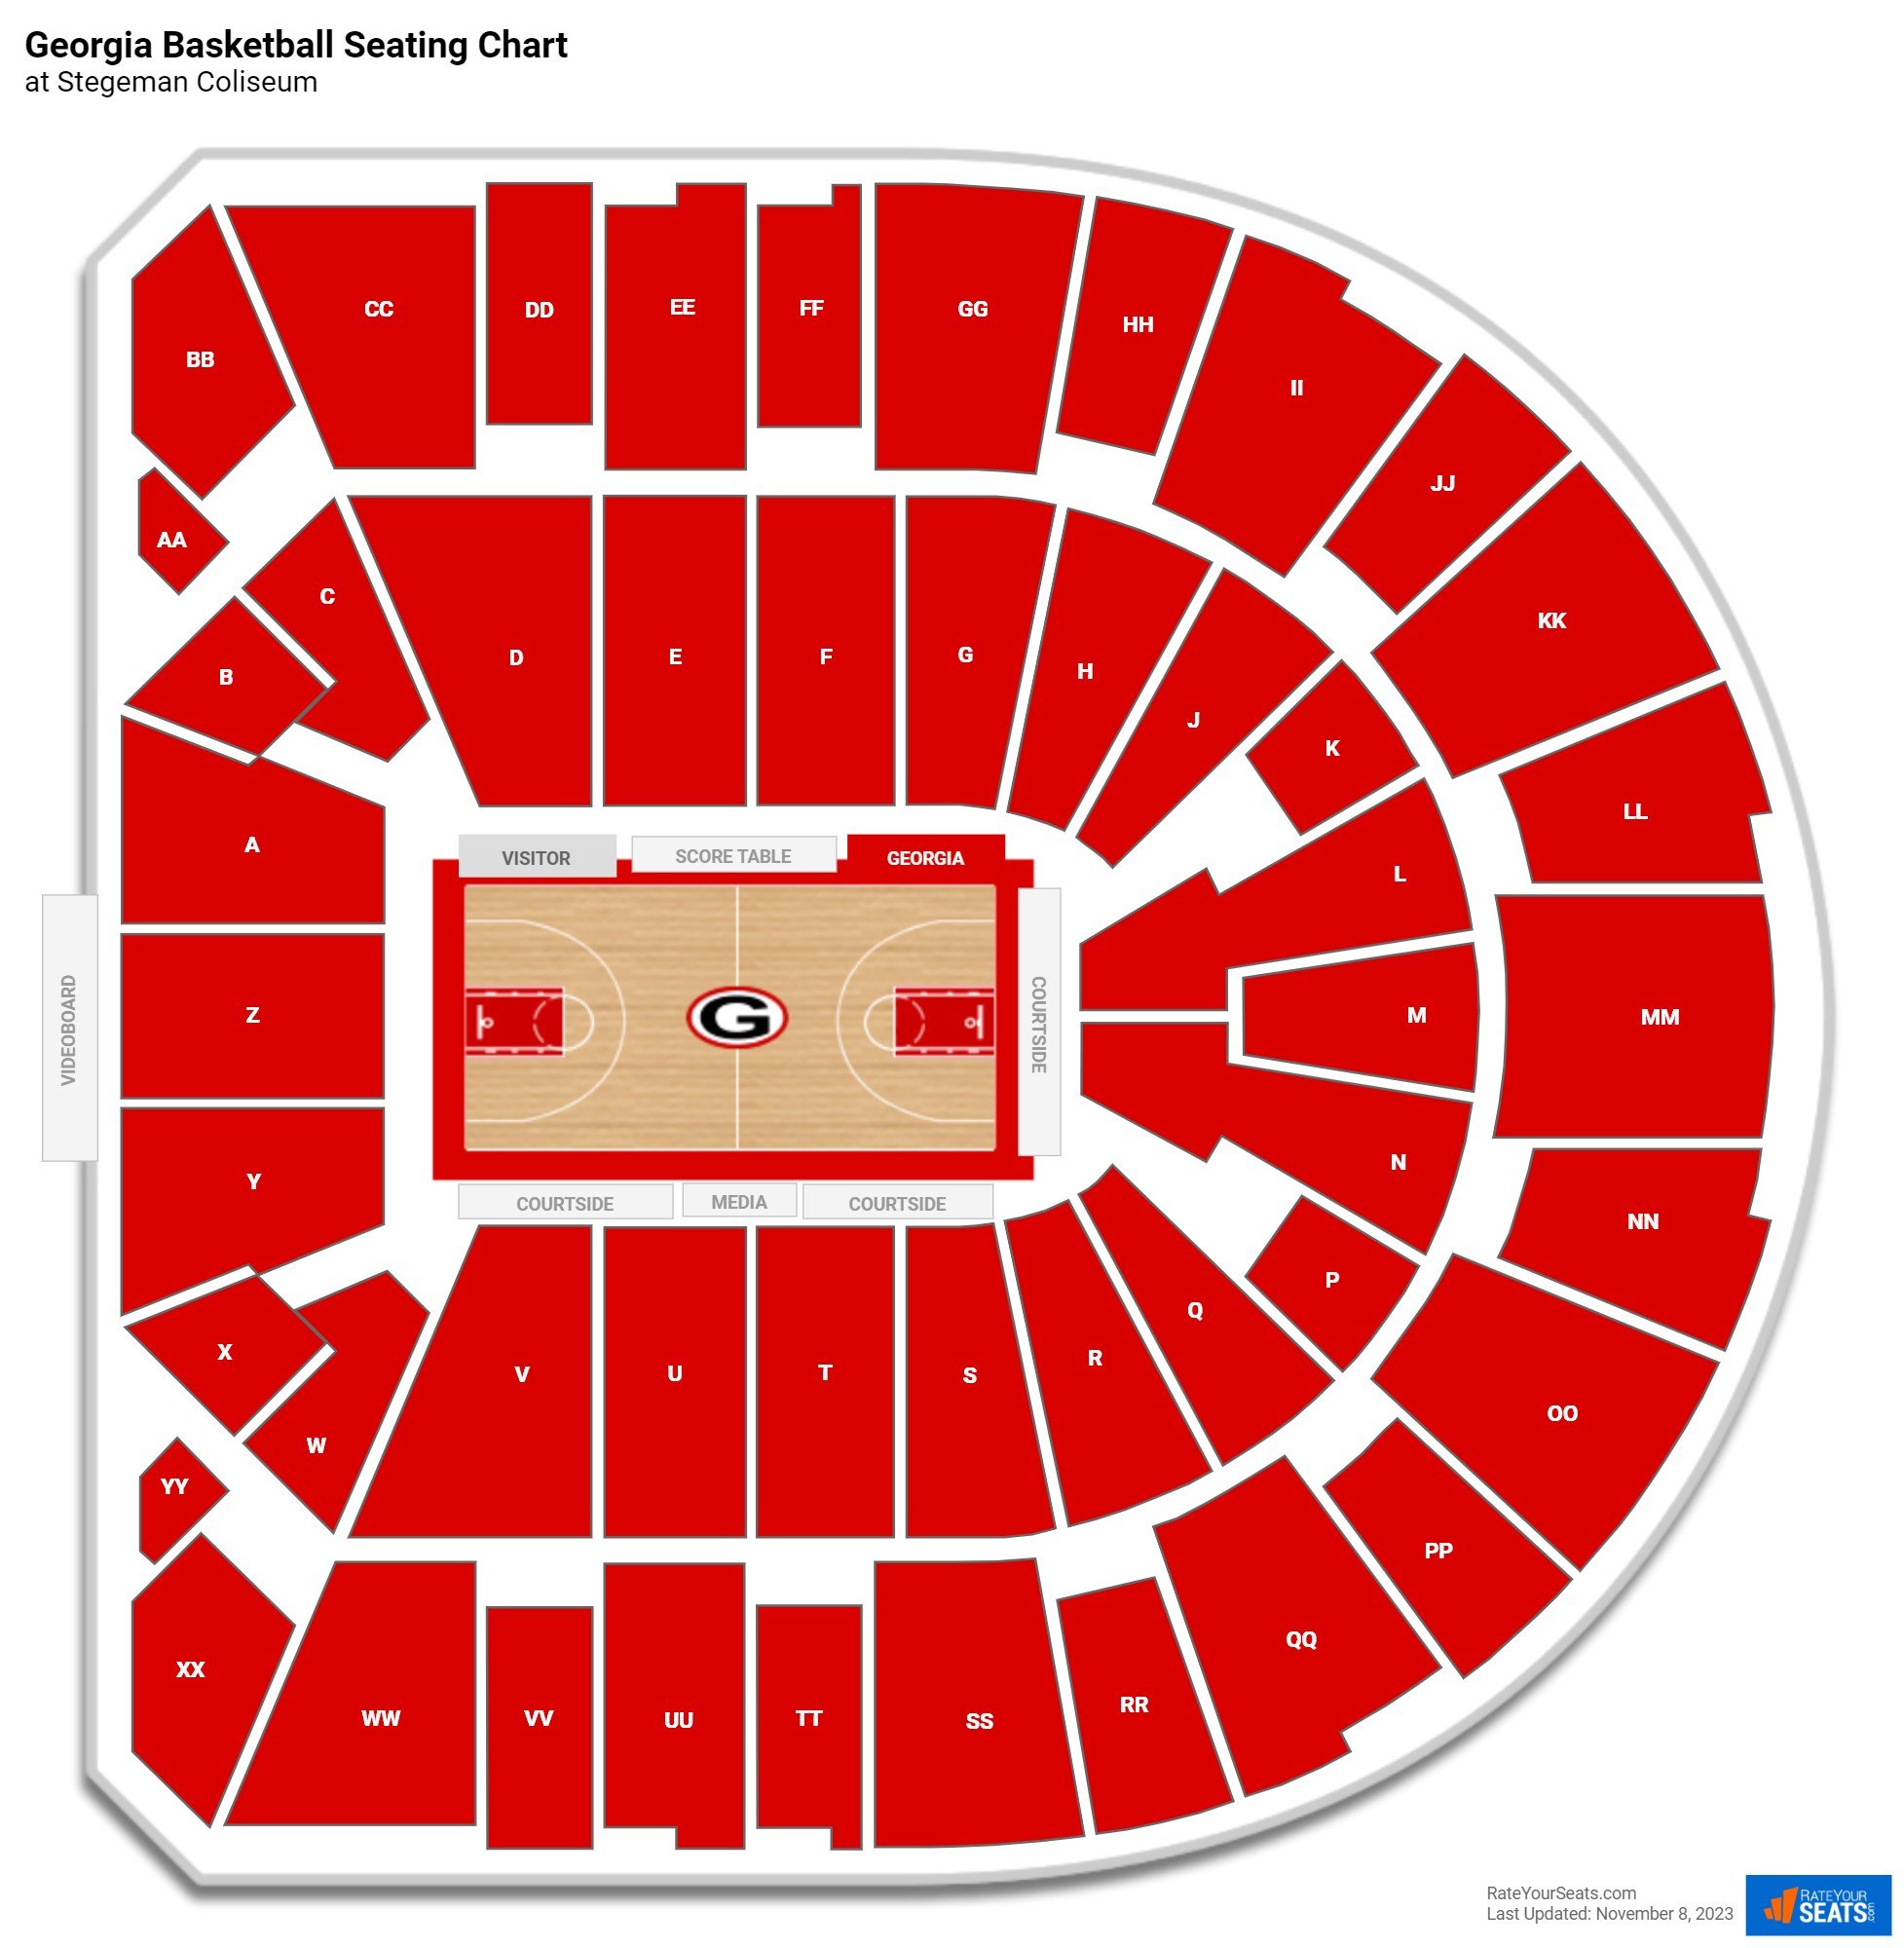 Georgia Bulldogs Seating Chart at Stegeman Coliseum